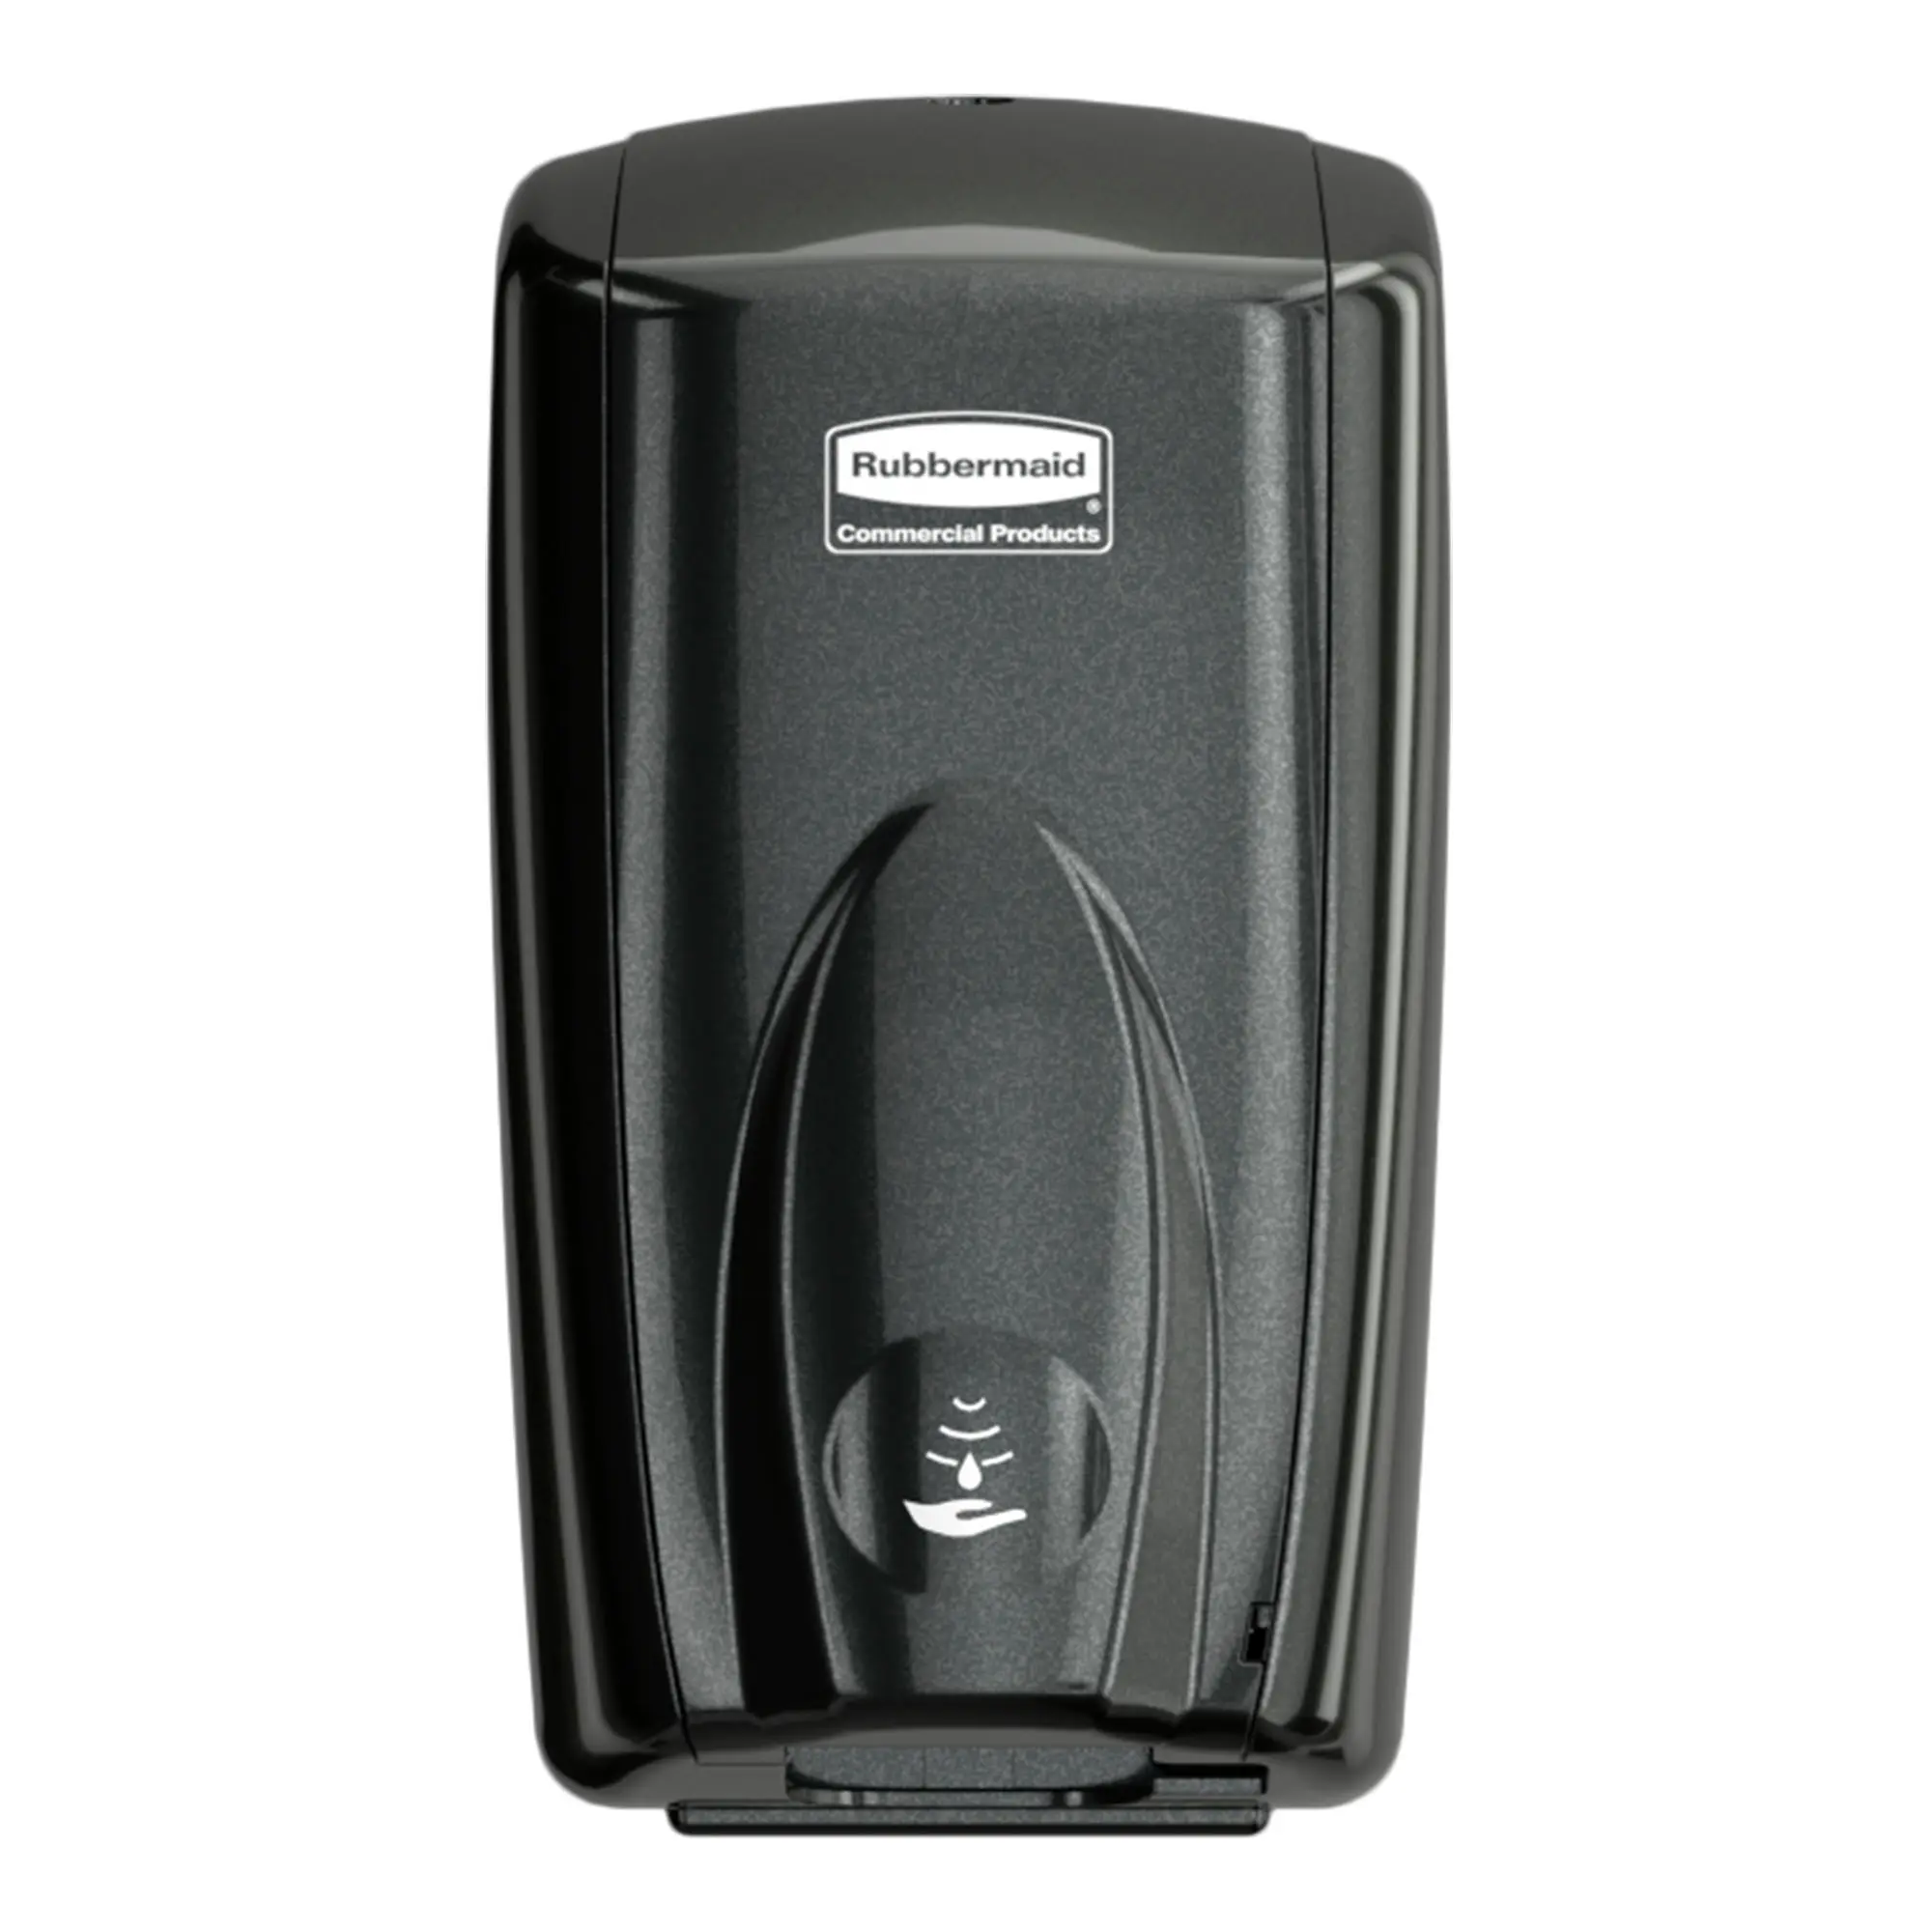 Rubbermaid AutoFoam Sensor-Schaumseifenspender & Desinfektionsspender 500ml